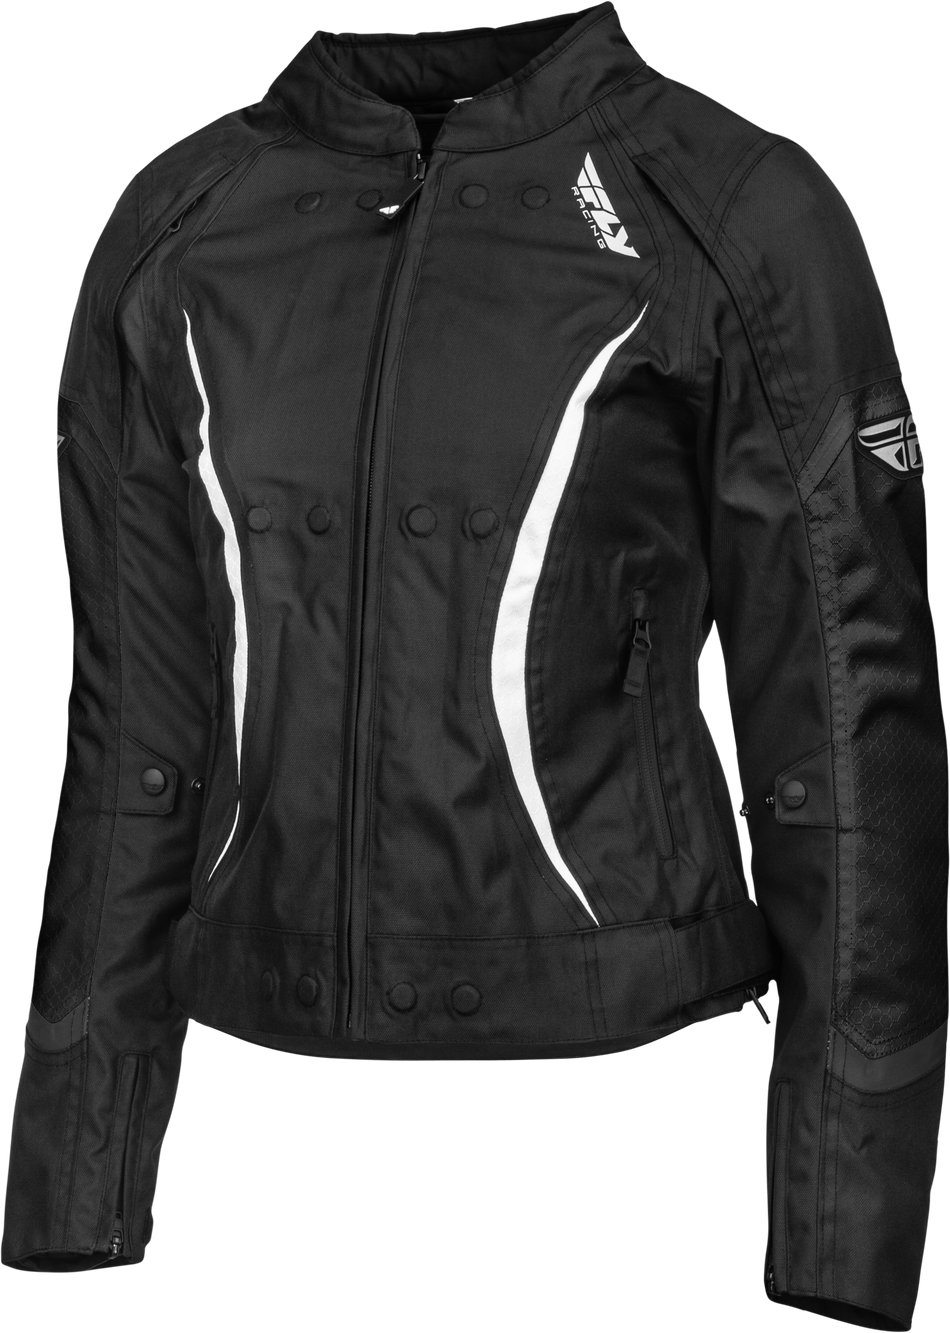 FLY RACING Women's Butane Jacket Black/White 3x 477-70423X